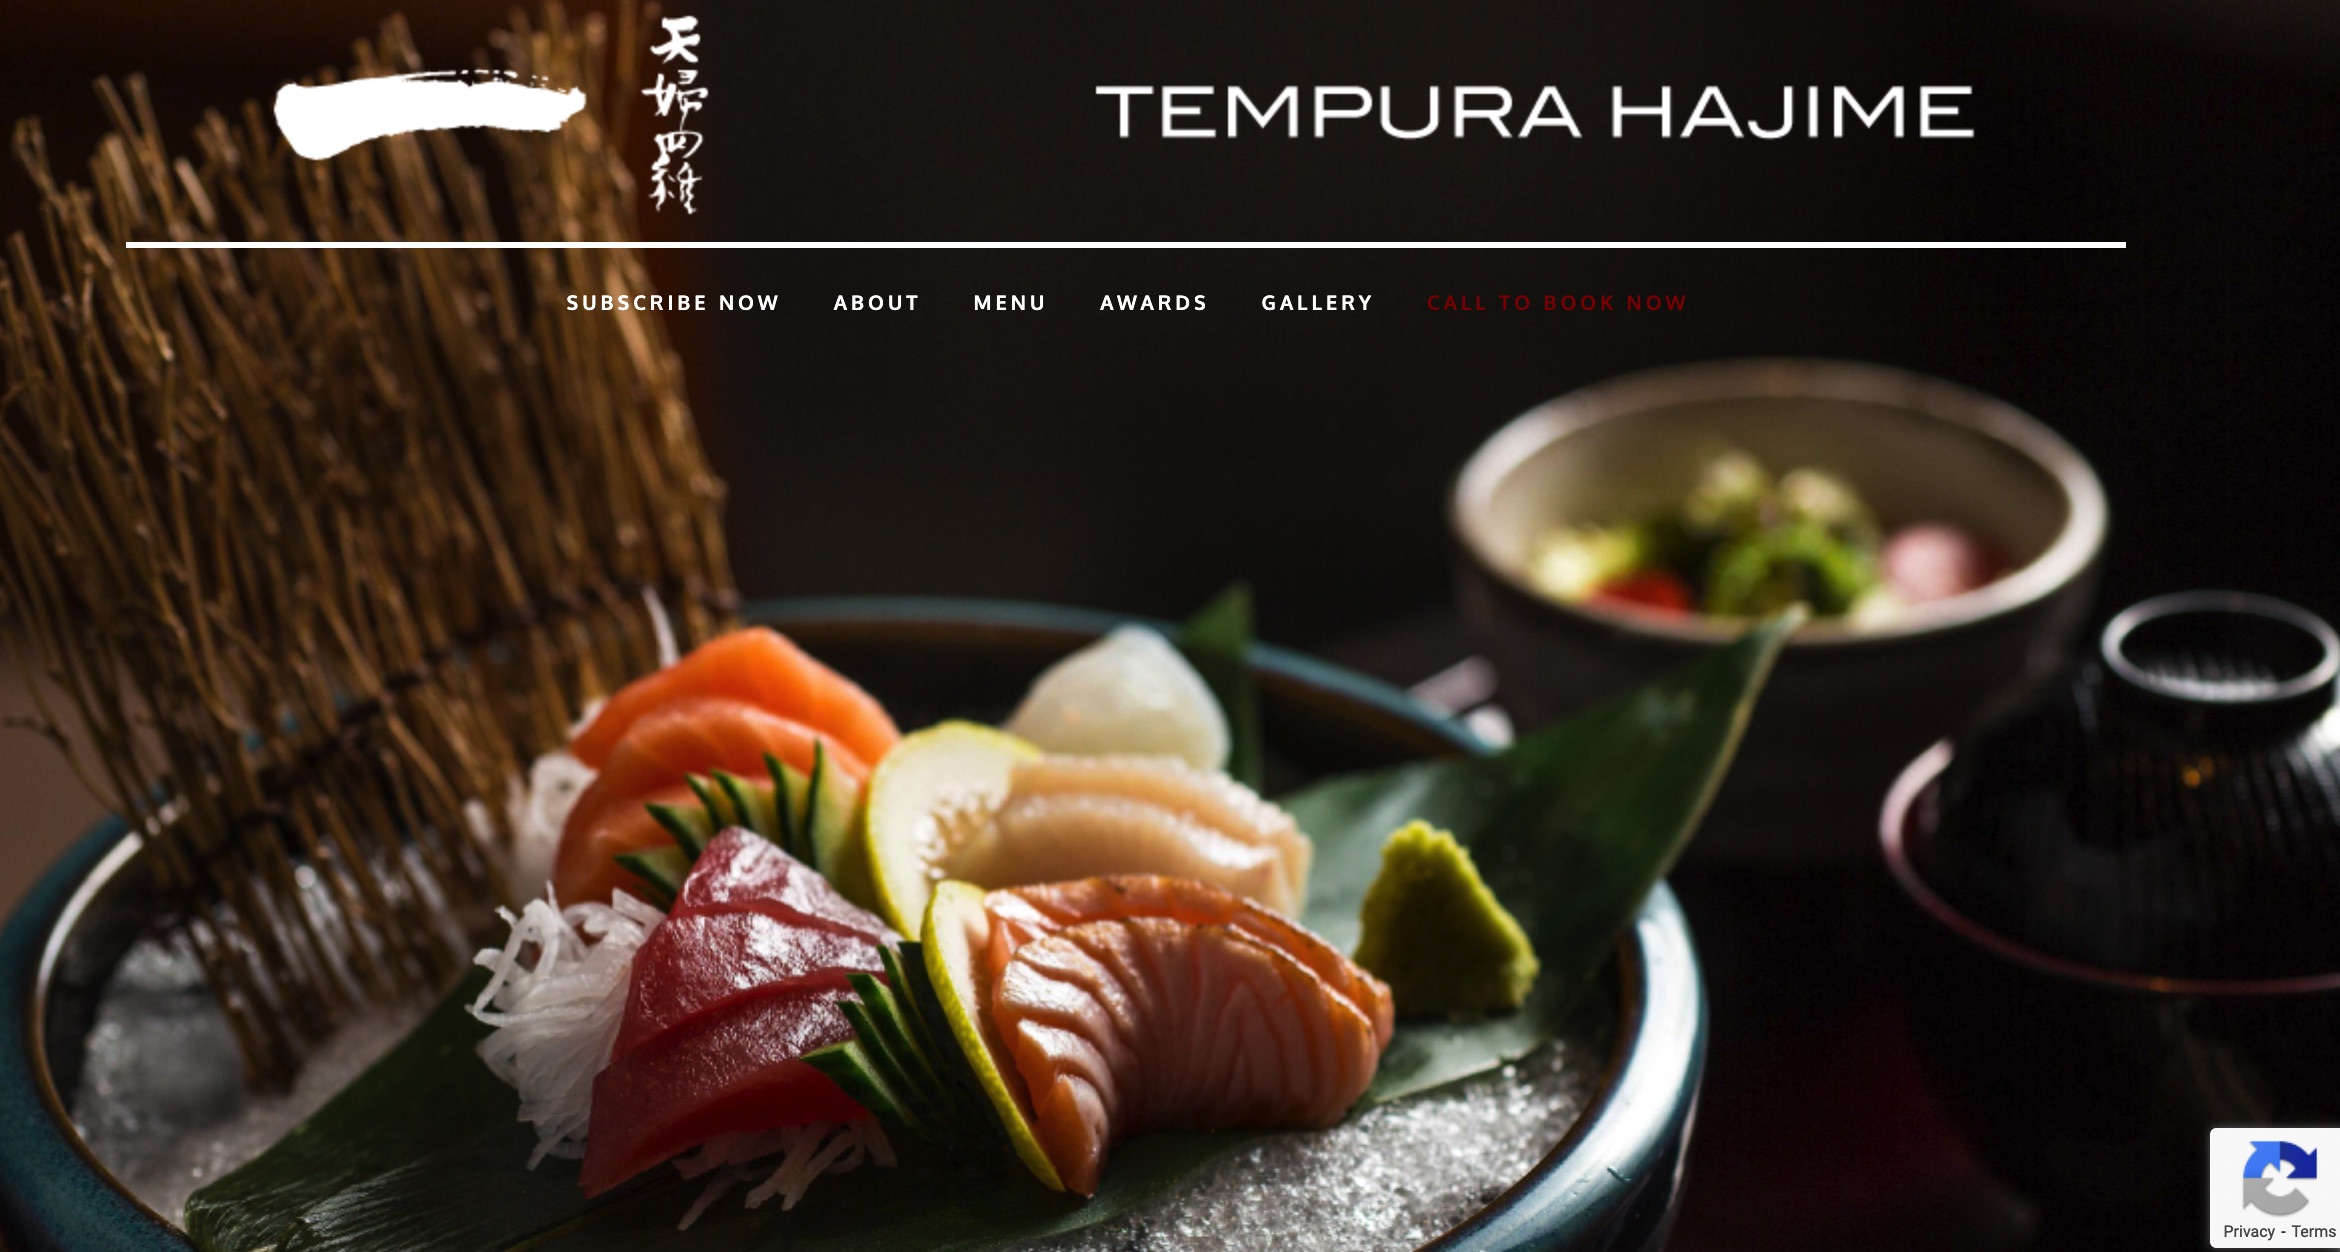 tempura hajime melbourne